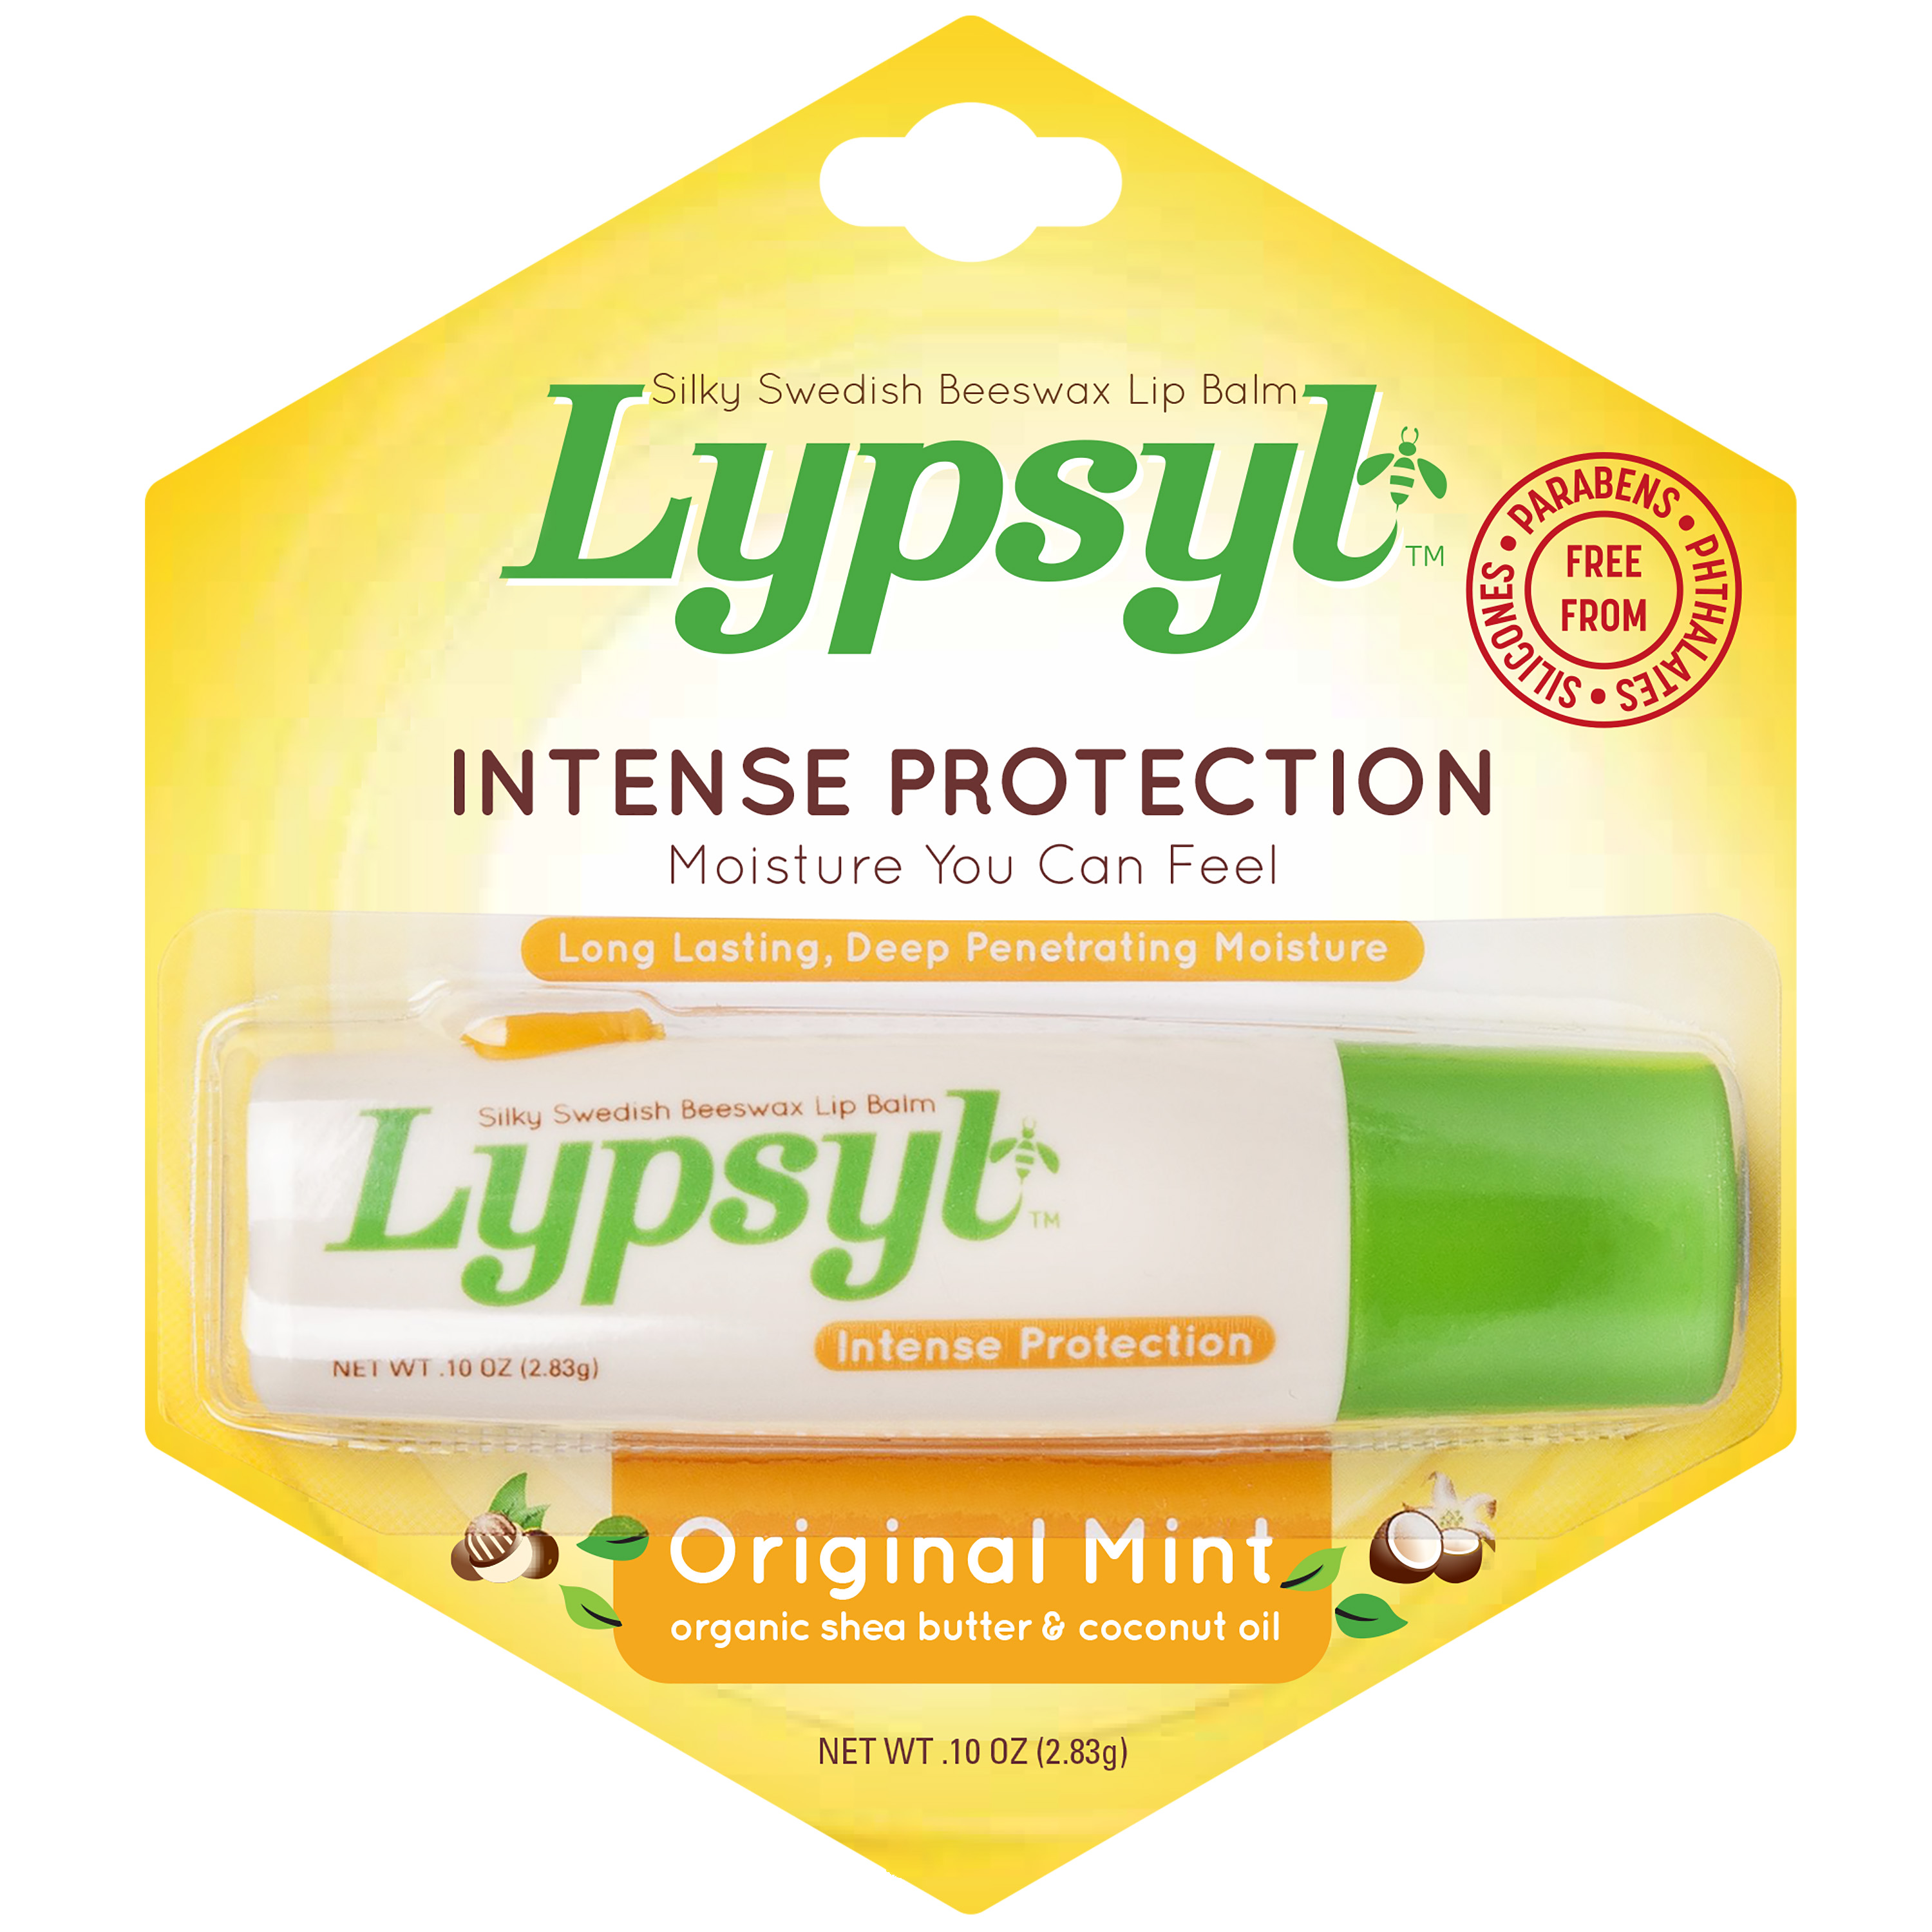 Lypsyl Intense Protection Original Mint Lip Balm, .10 oz. - image 1 of 9